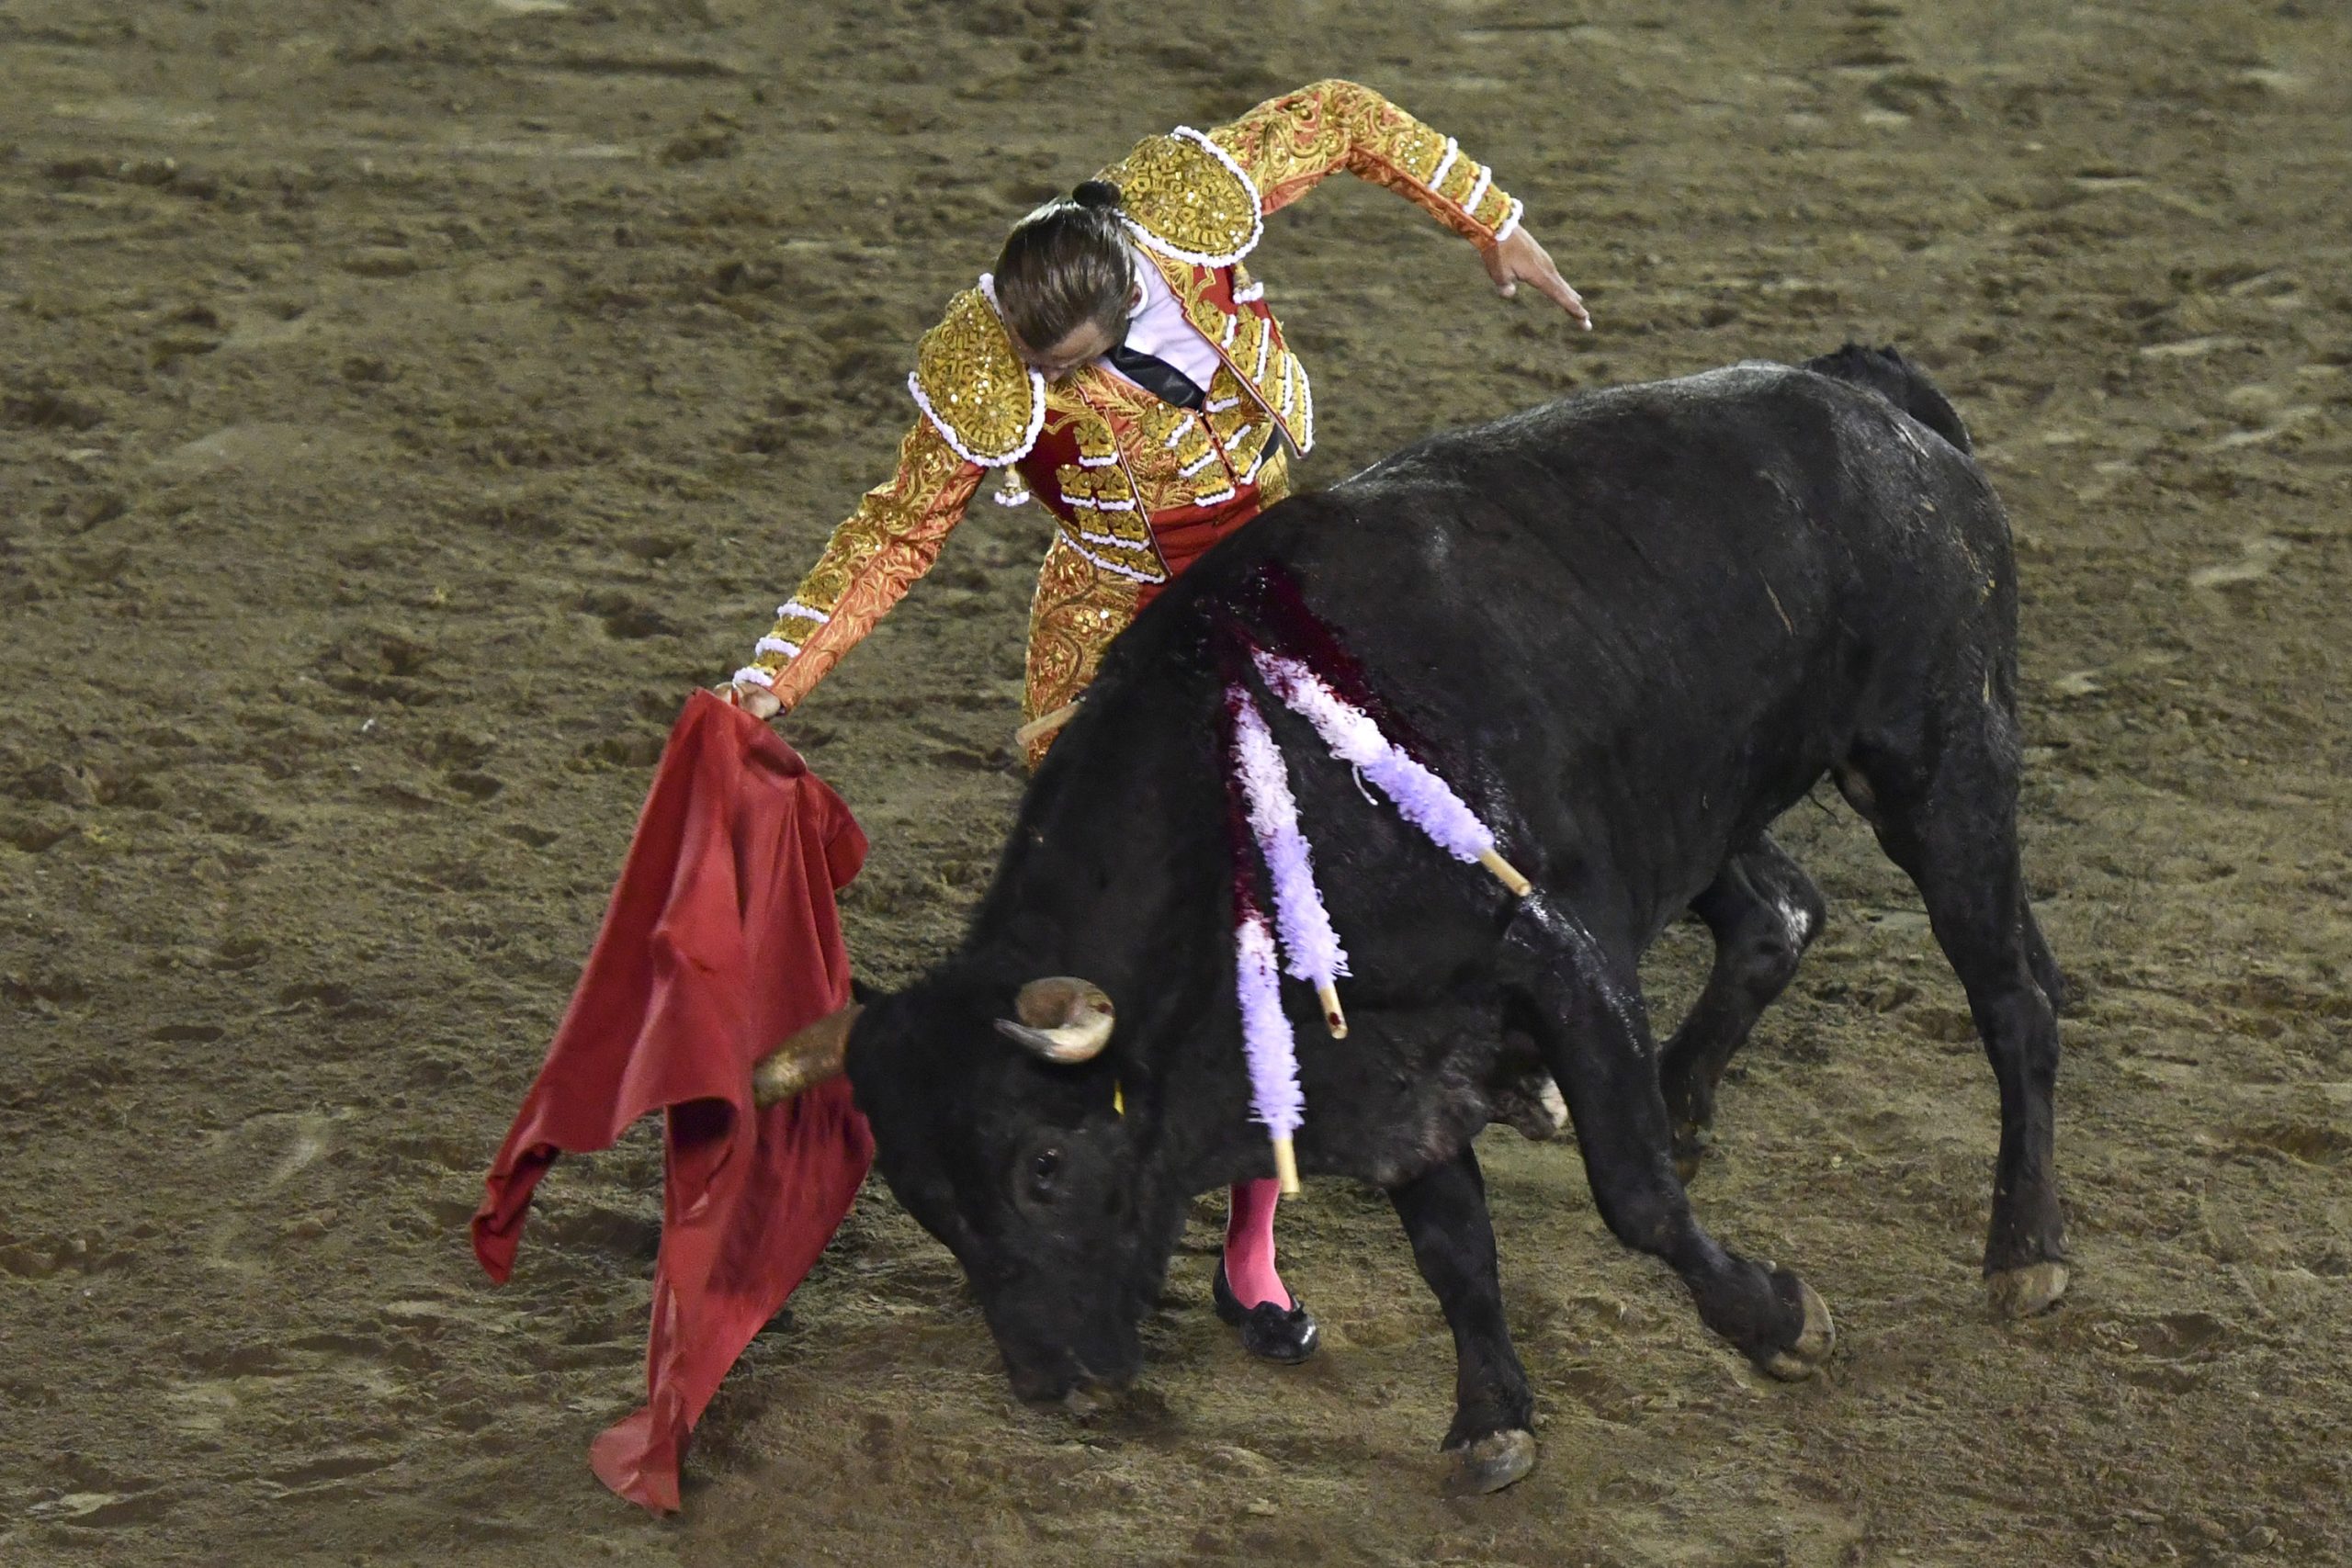 Eduardo Rivera desaíra demandas para prohibir corridas de toro